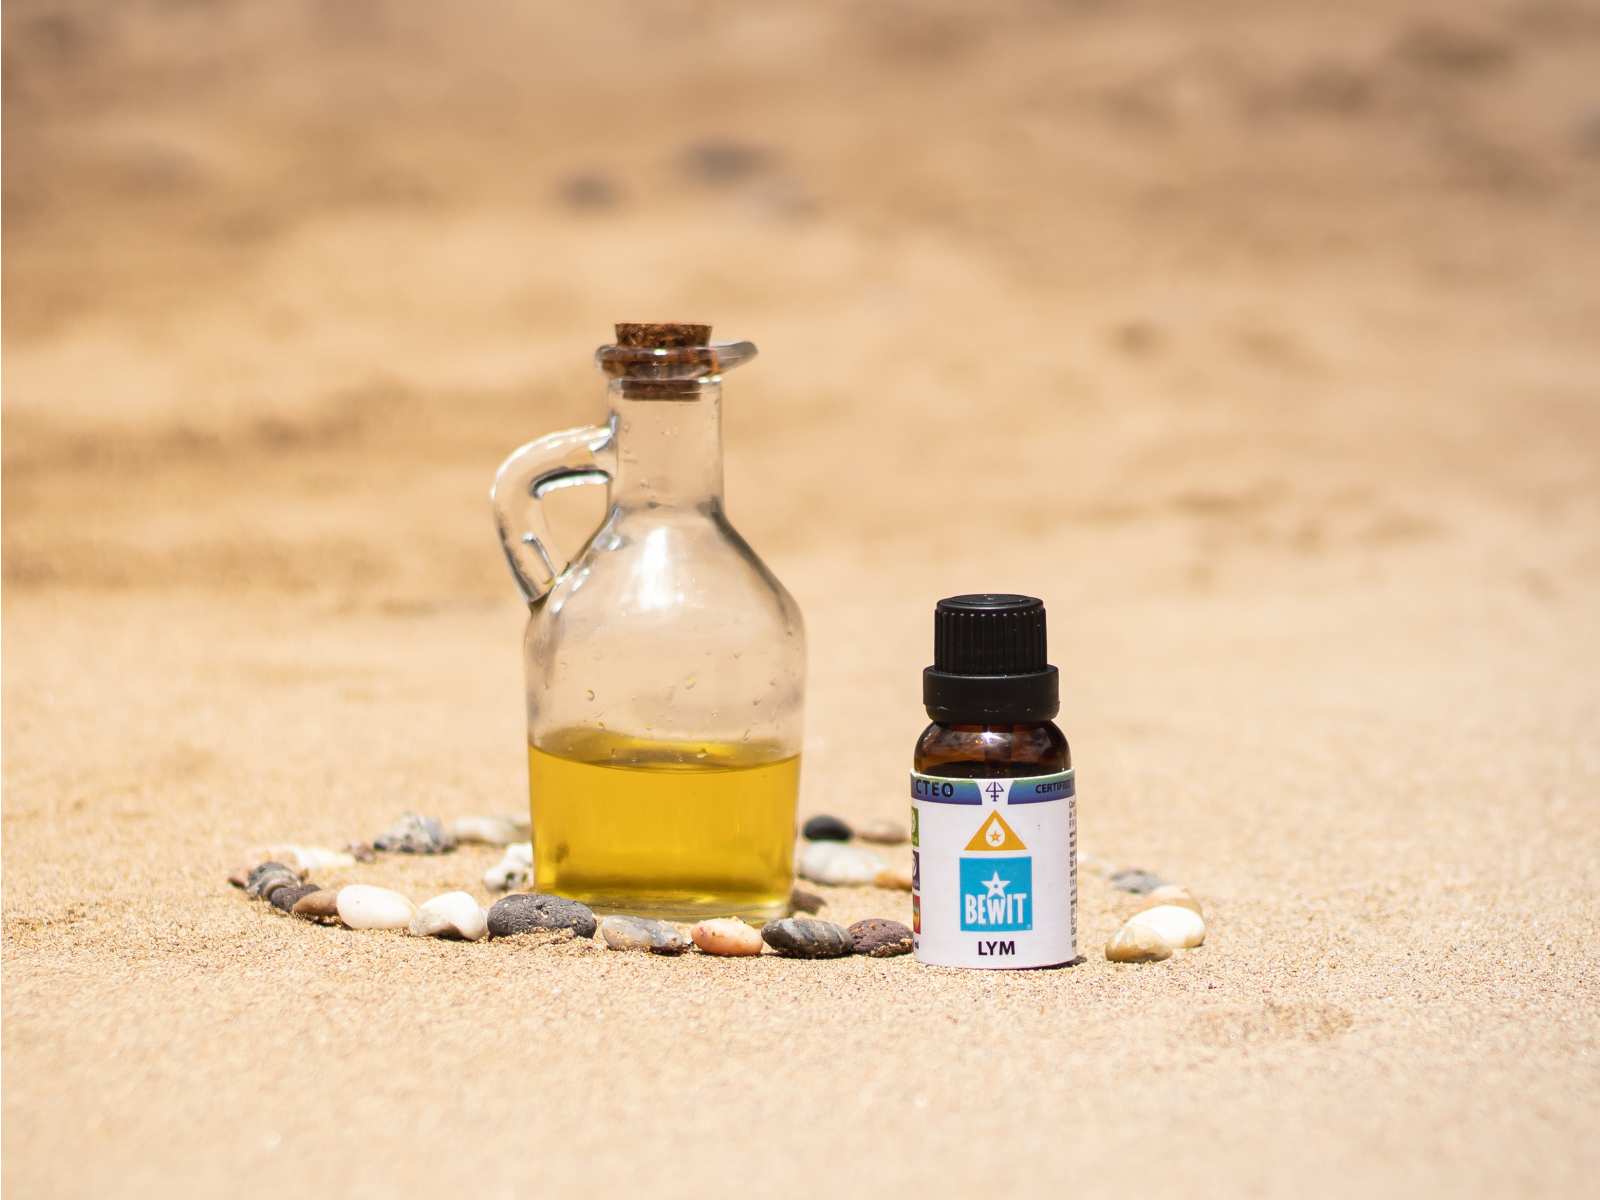 BEWIT LYM - Blend of essential oils - 3